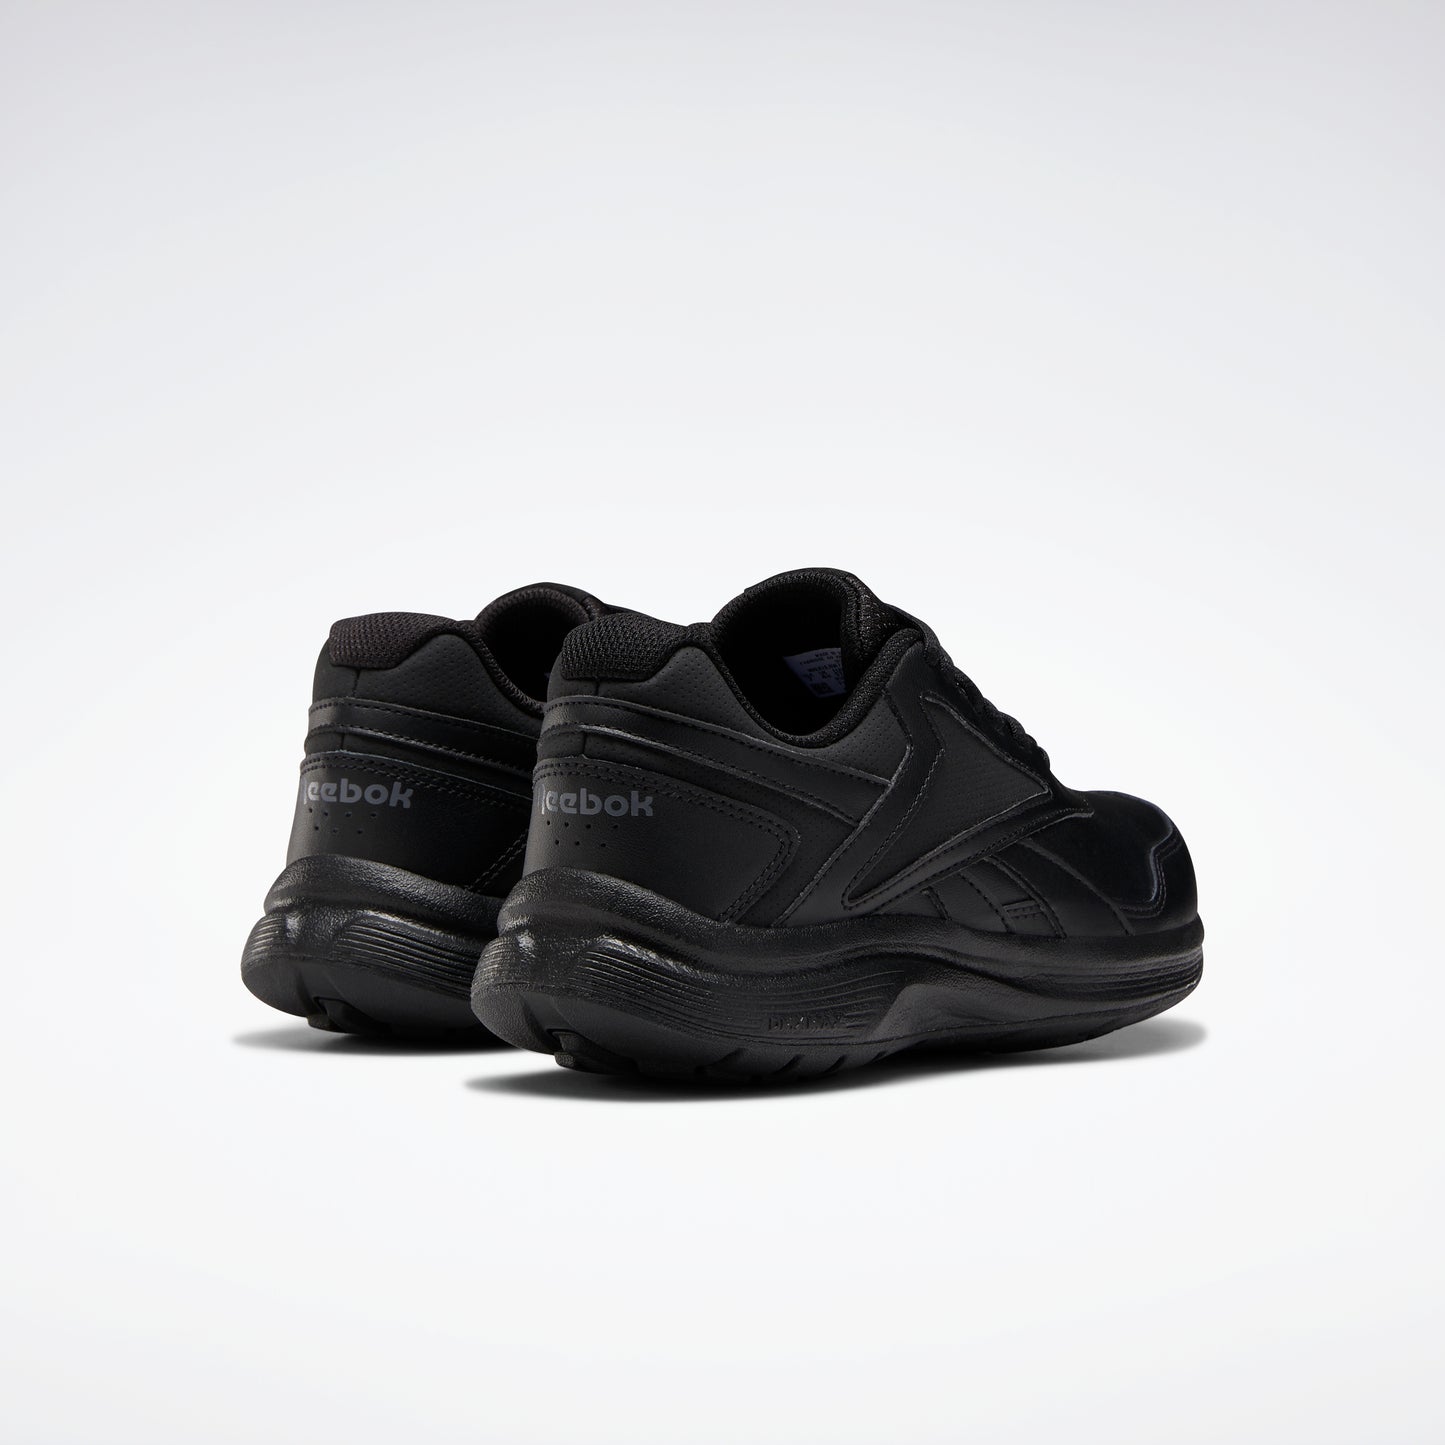 Reebok Footwear Women Walk Ultra 7.0 Dmx Max Shoes Black/Cdgry5/Croyal